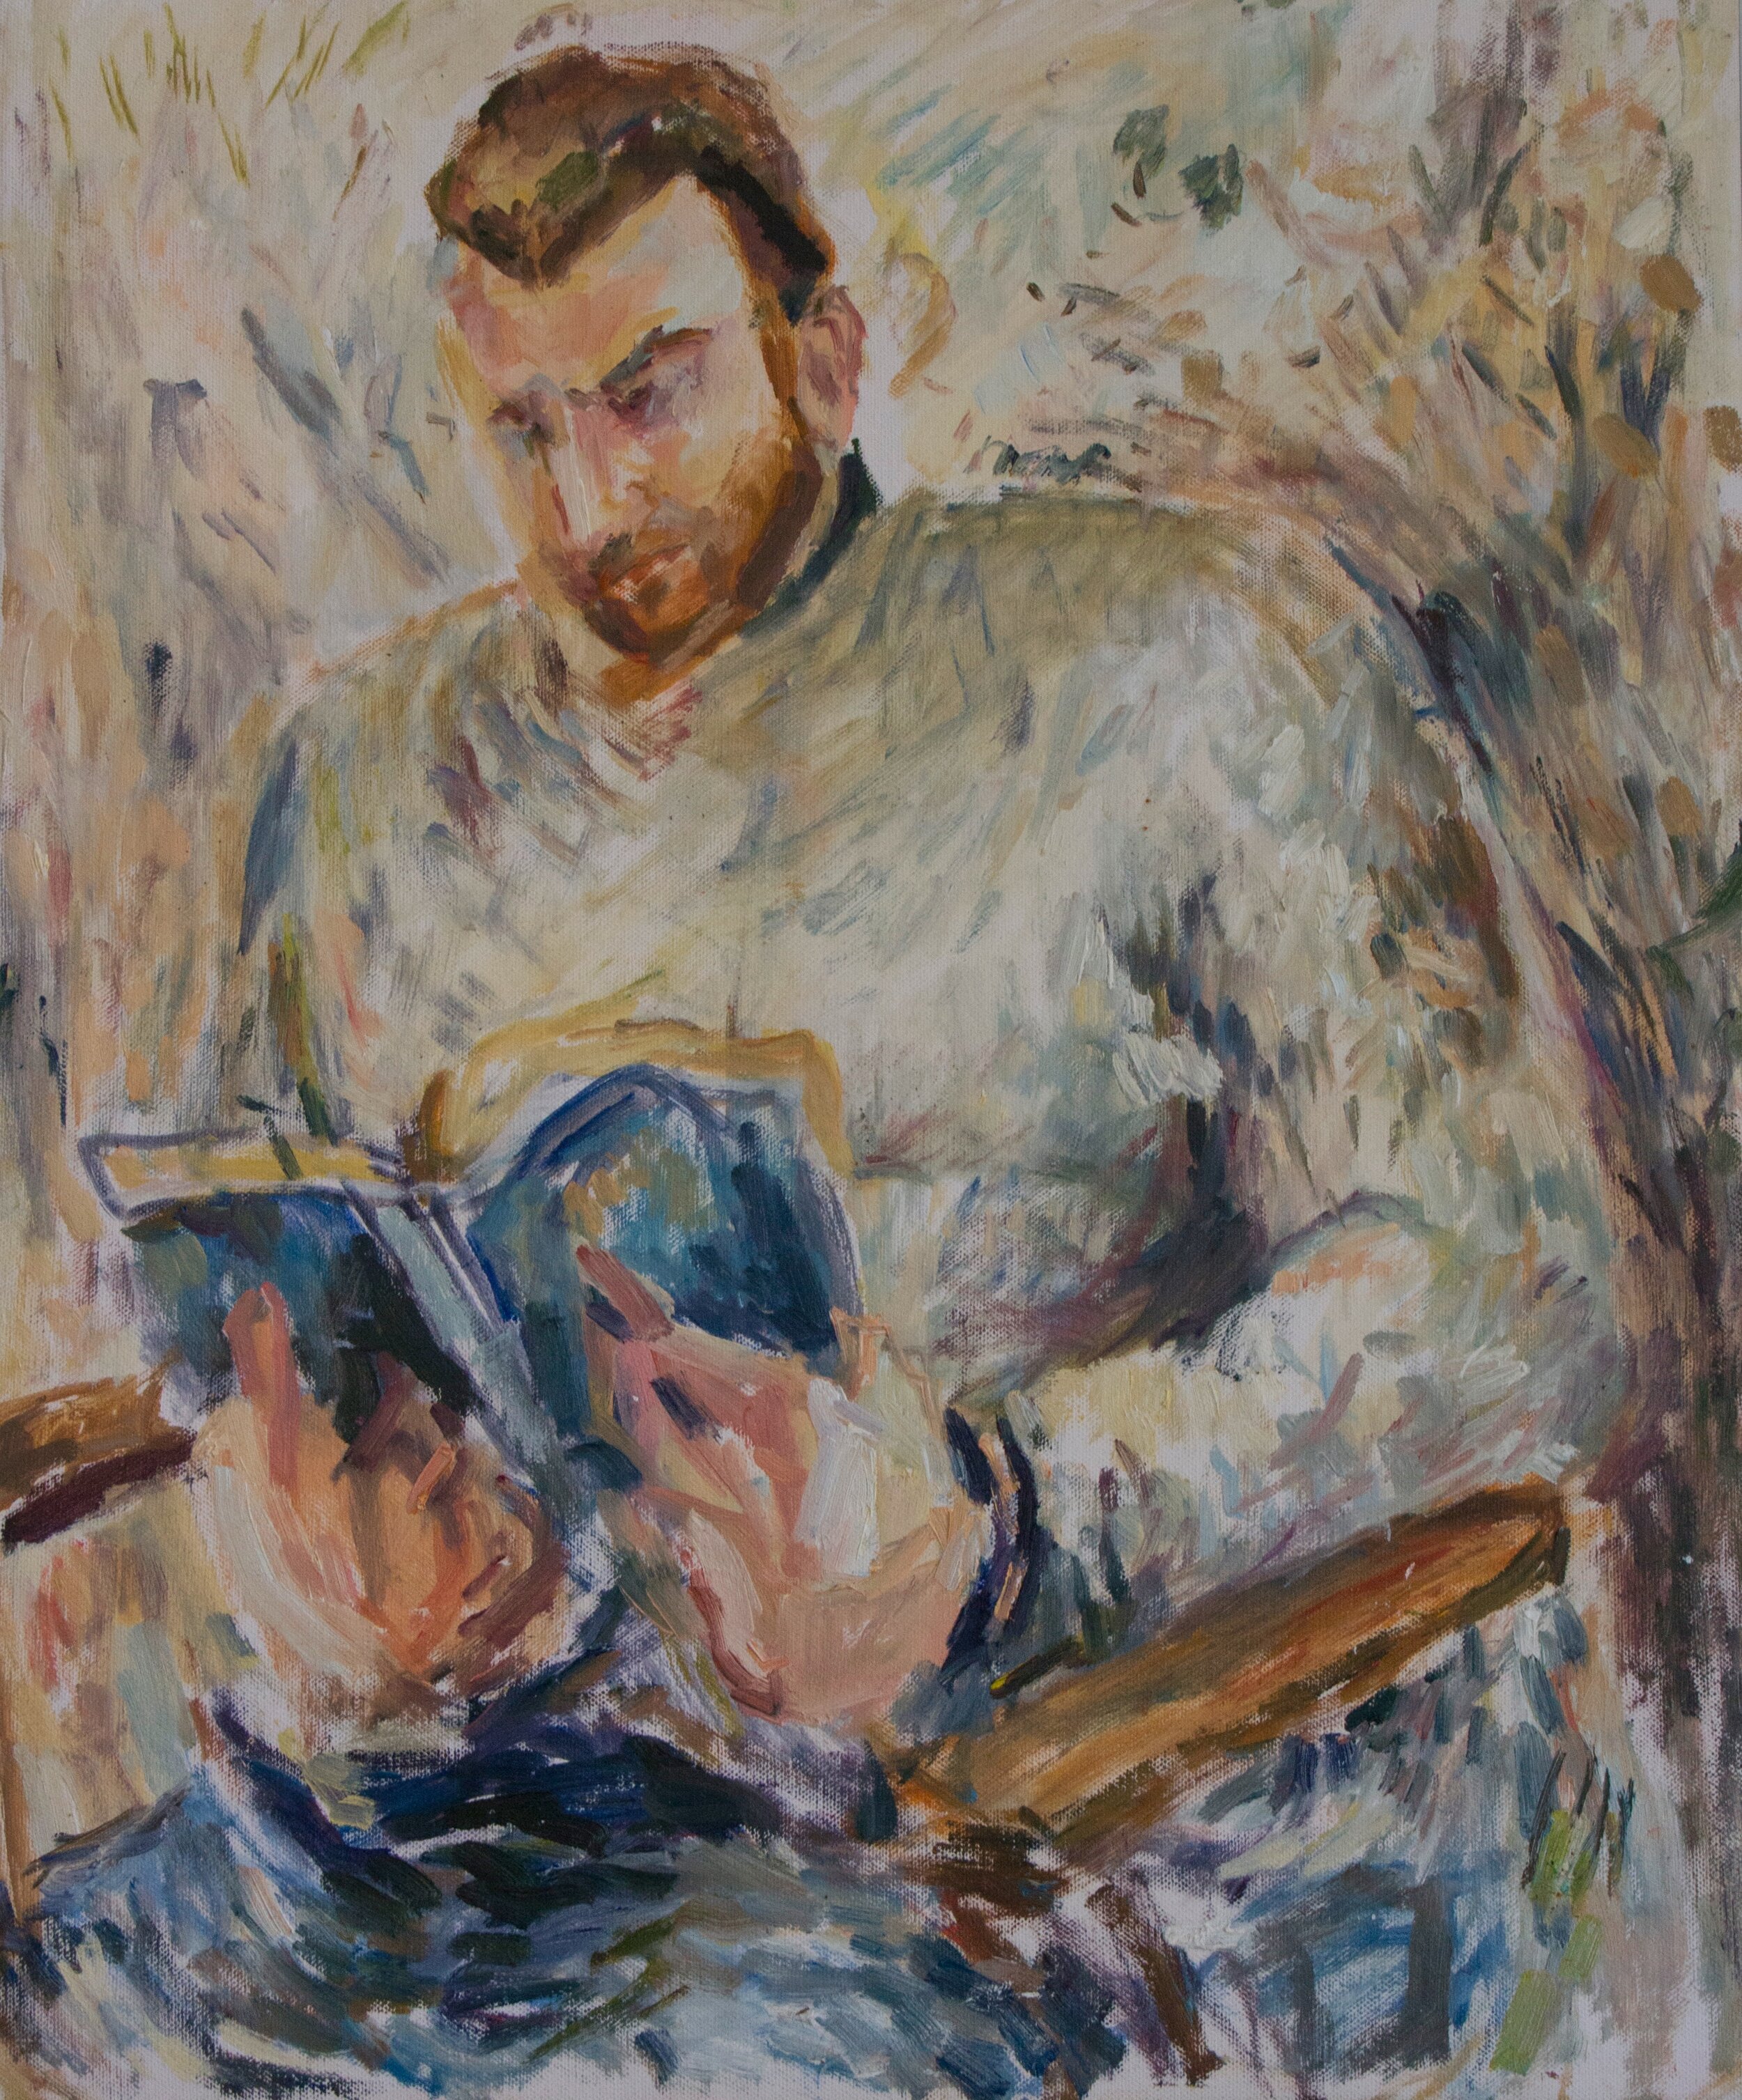 Ben Reading, oil on canvas, 2018